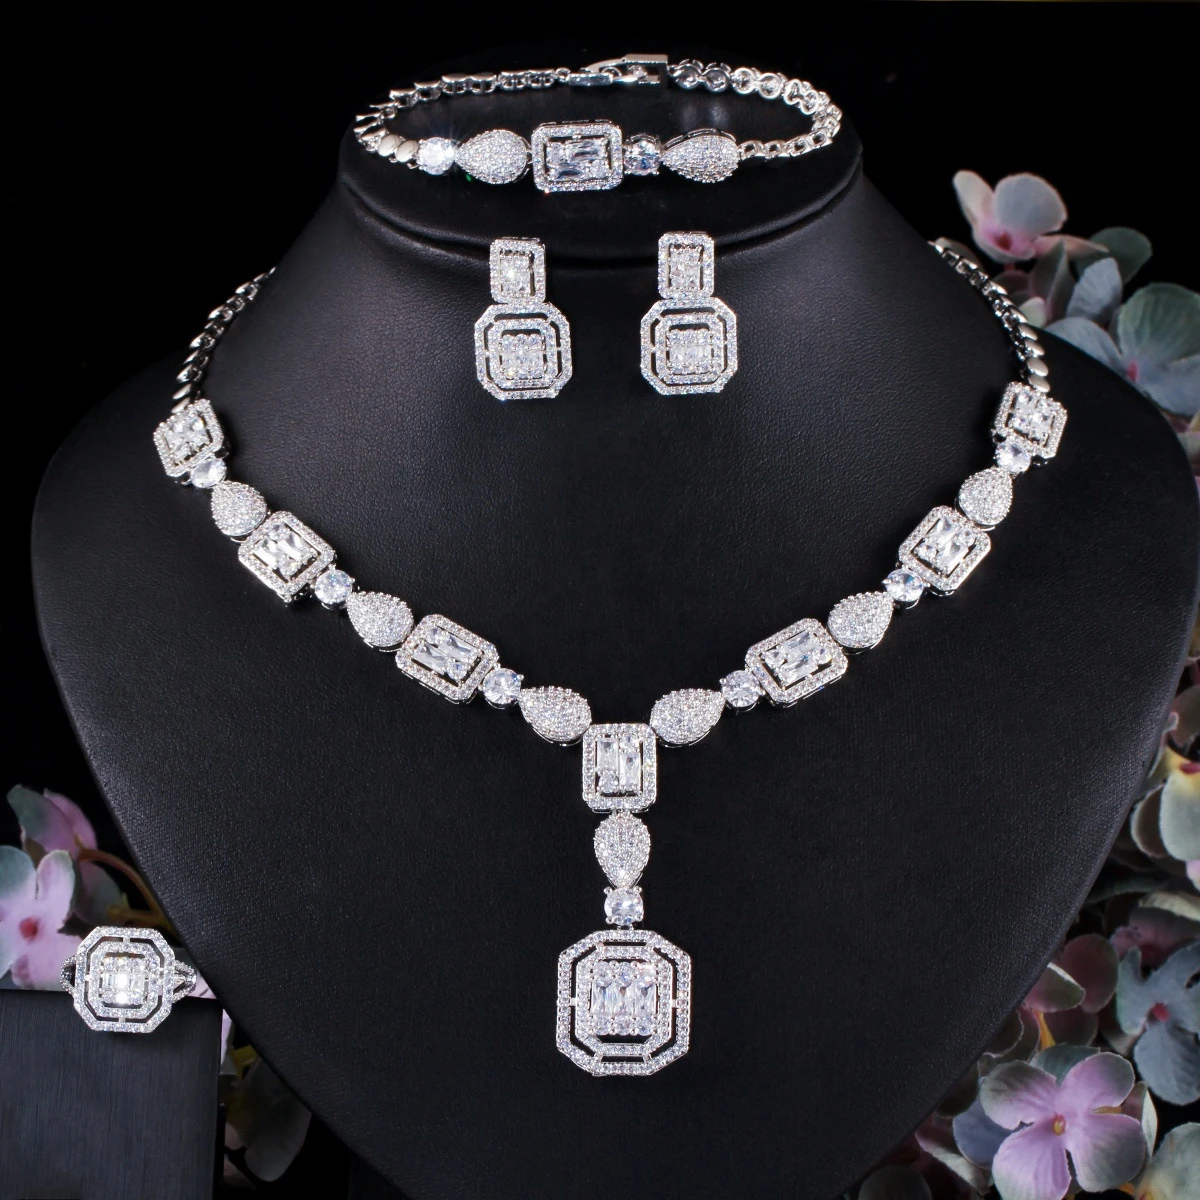 Cheerfeel NE-299  zircon square shape earring bracelet necklace set wedding bridal 18k gold filled plated necklace